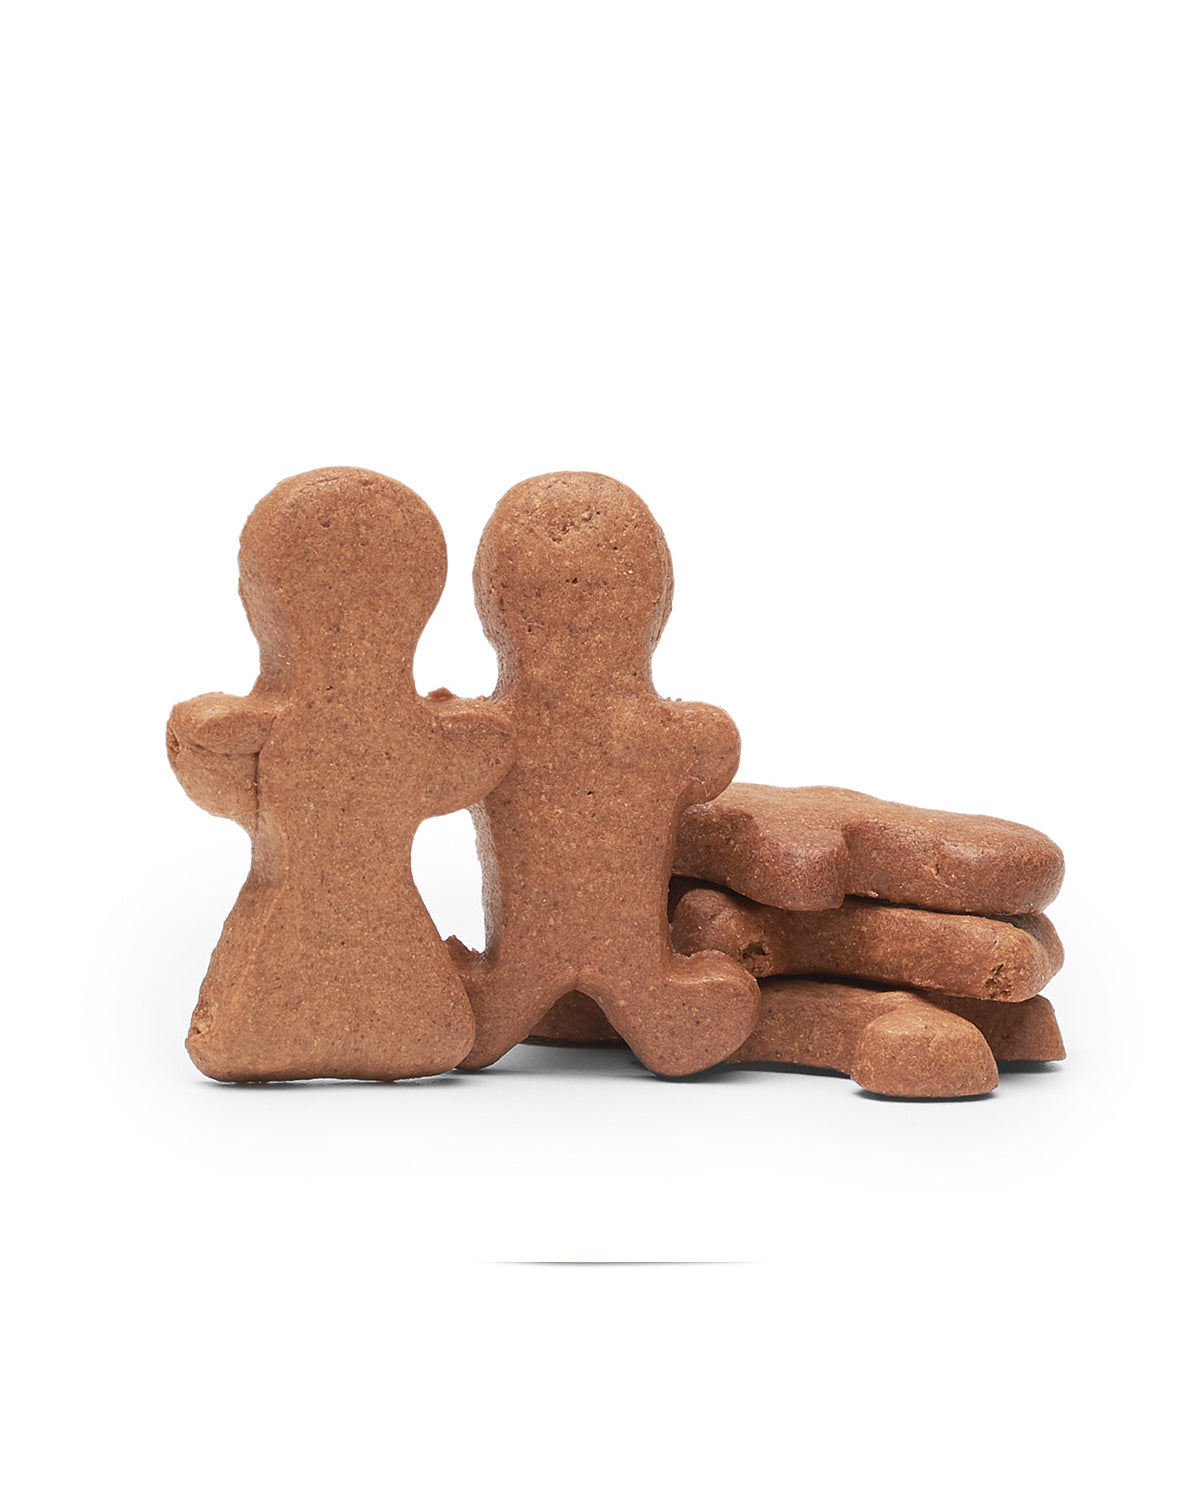 Grain & Gluten-Free Gingerbread Dog Biscuits